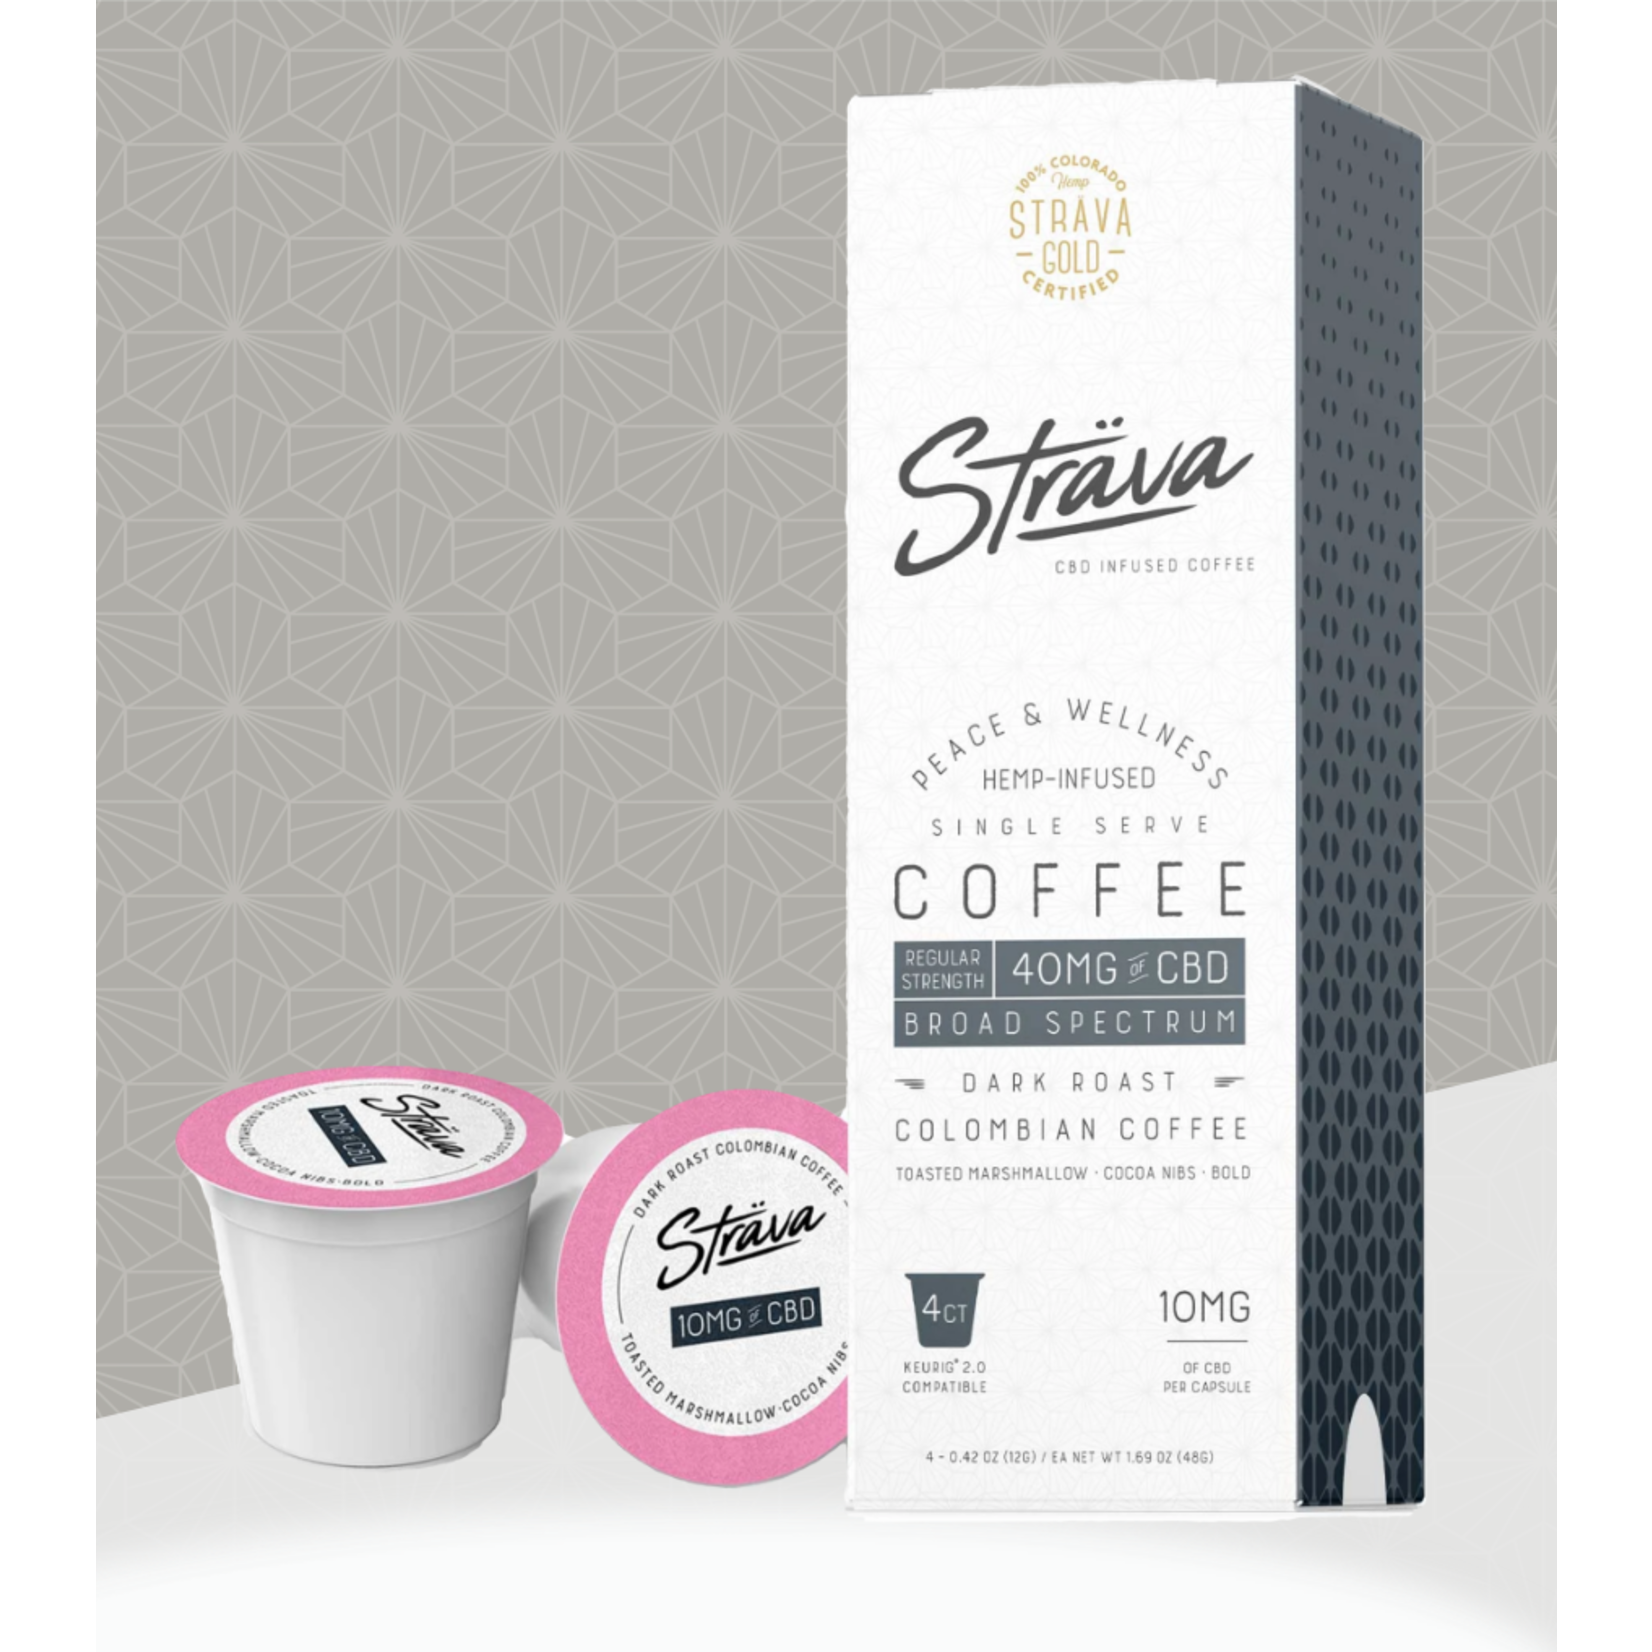 Strava Strava CBD infused Coffee 40mg Broad Spectrum Dark Roast Regular Strength Single Serve  Keurig Cup